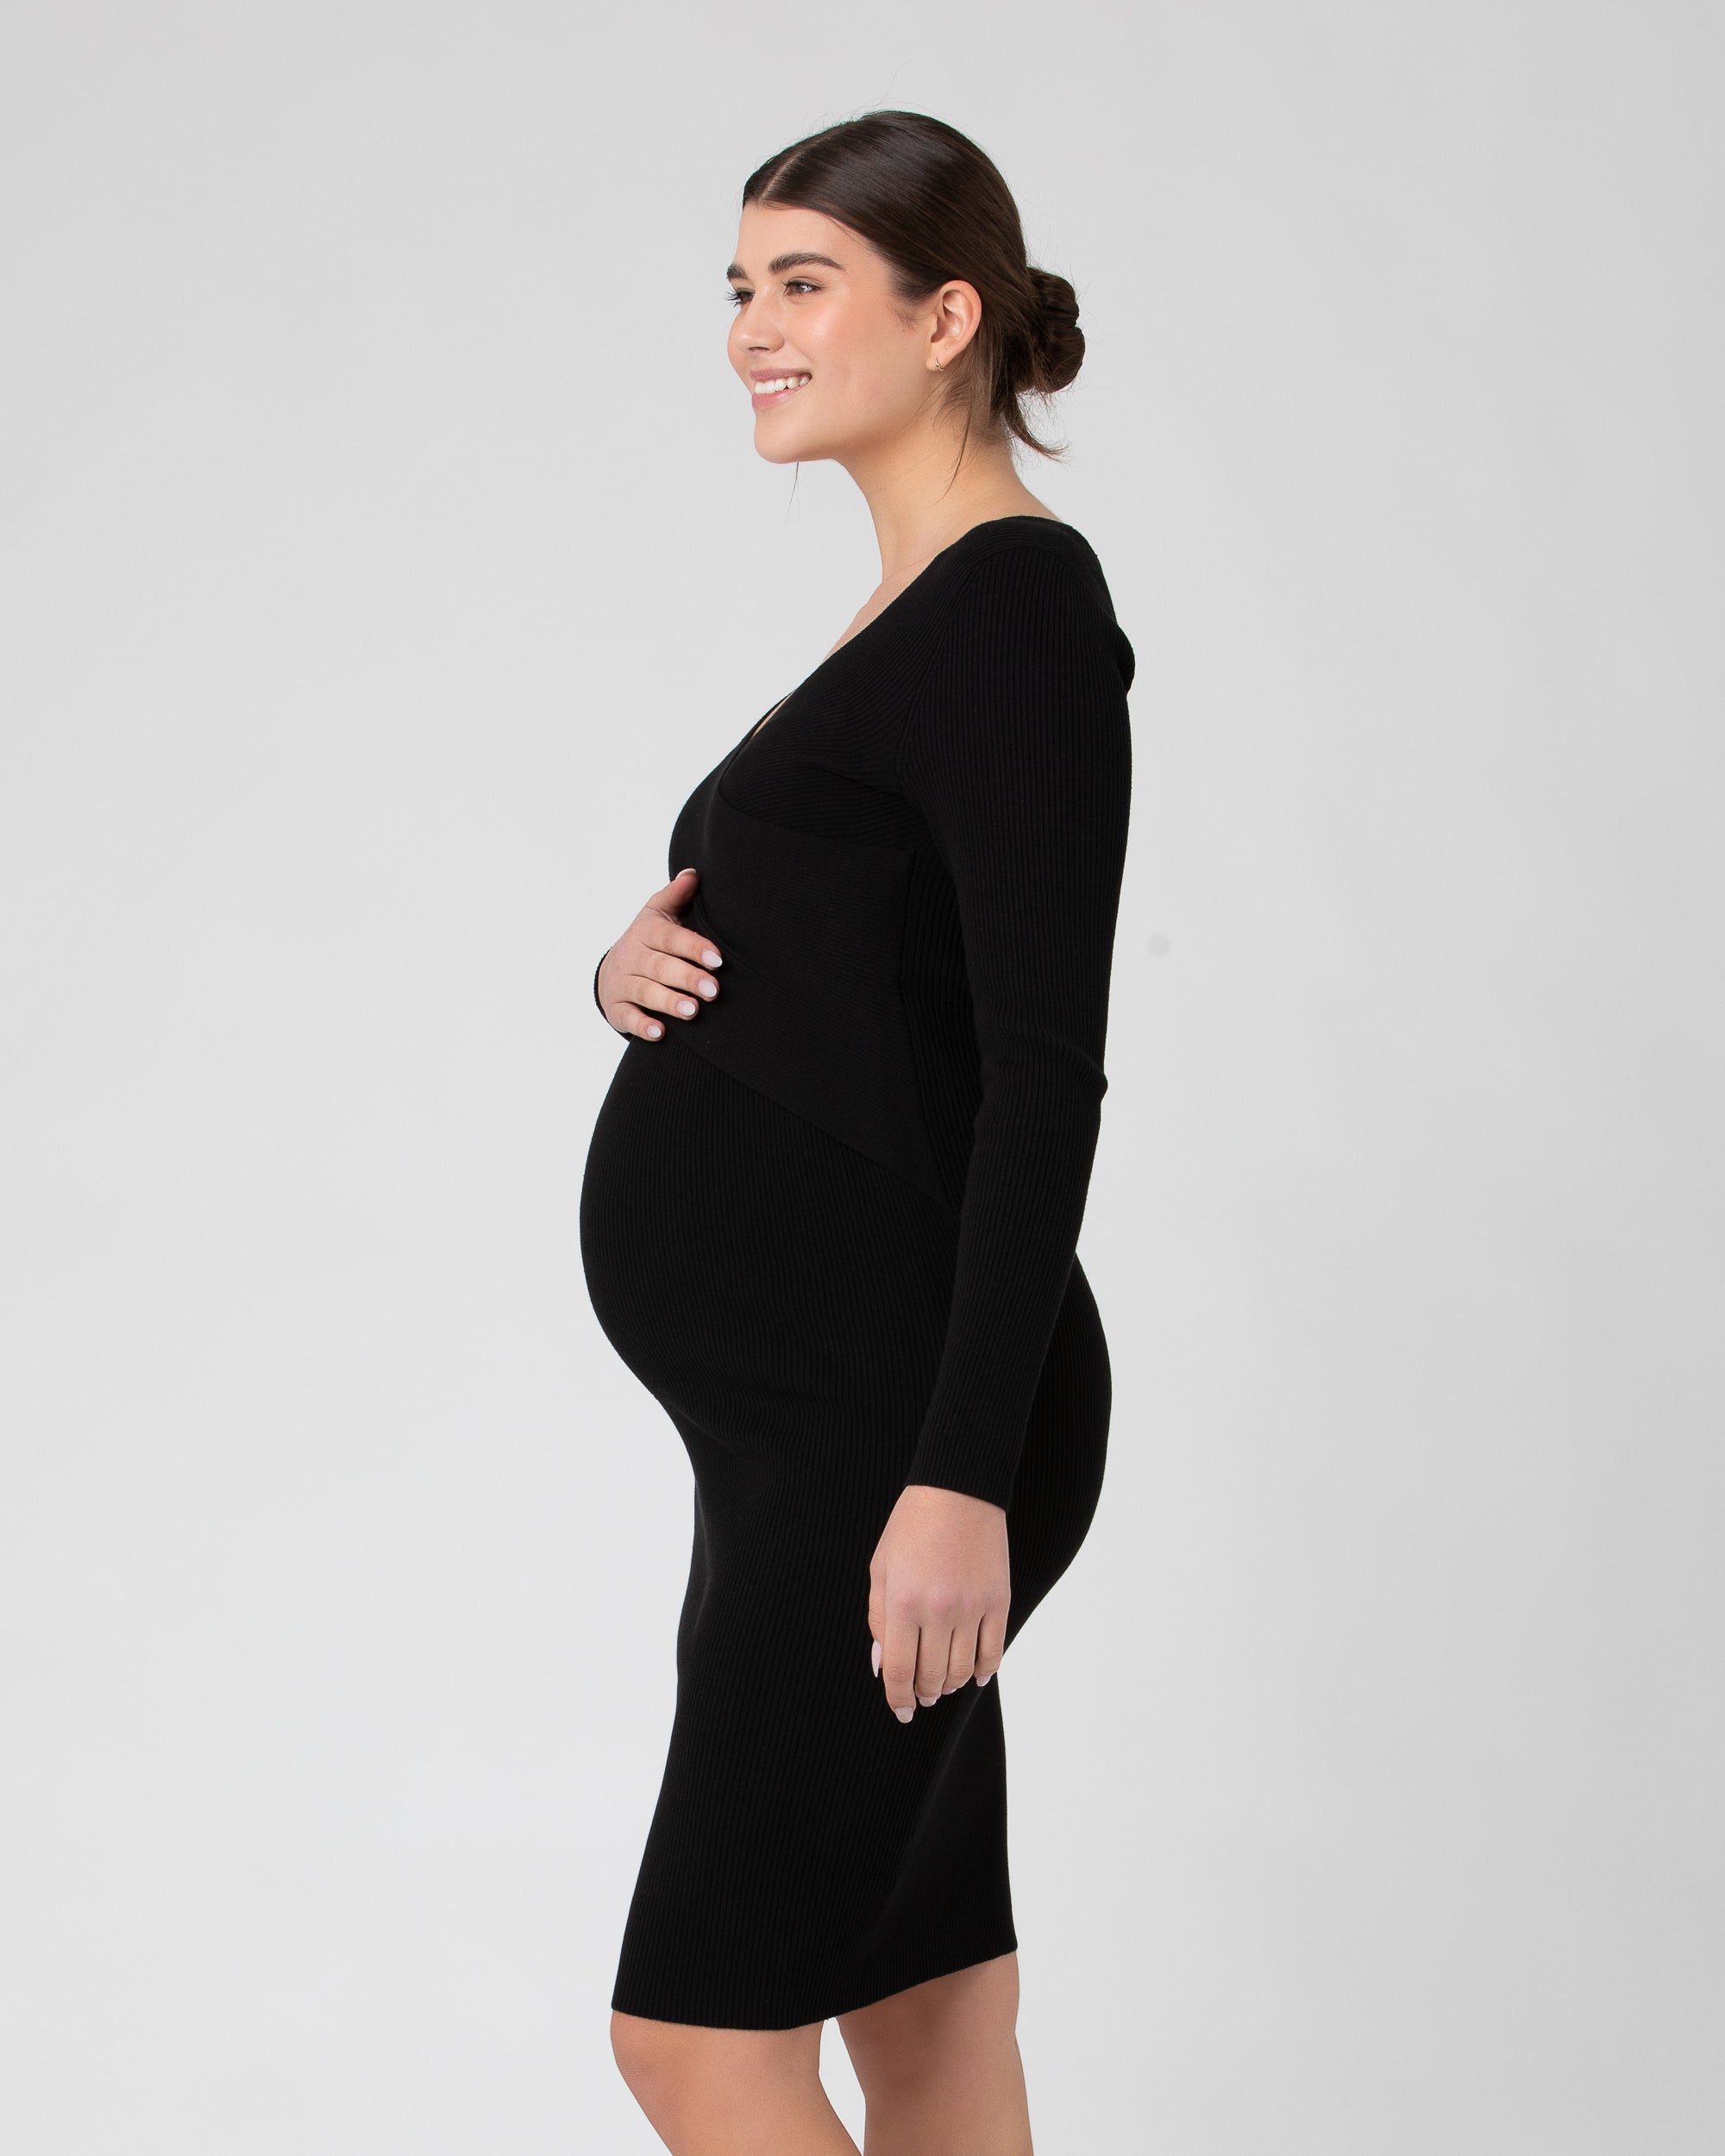 roupa linda de gravidas  Clothes for pregnant women, Stylish maternity  dress, Maternity nursing clothes